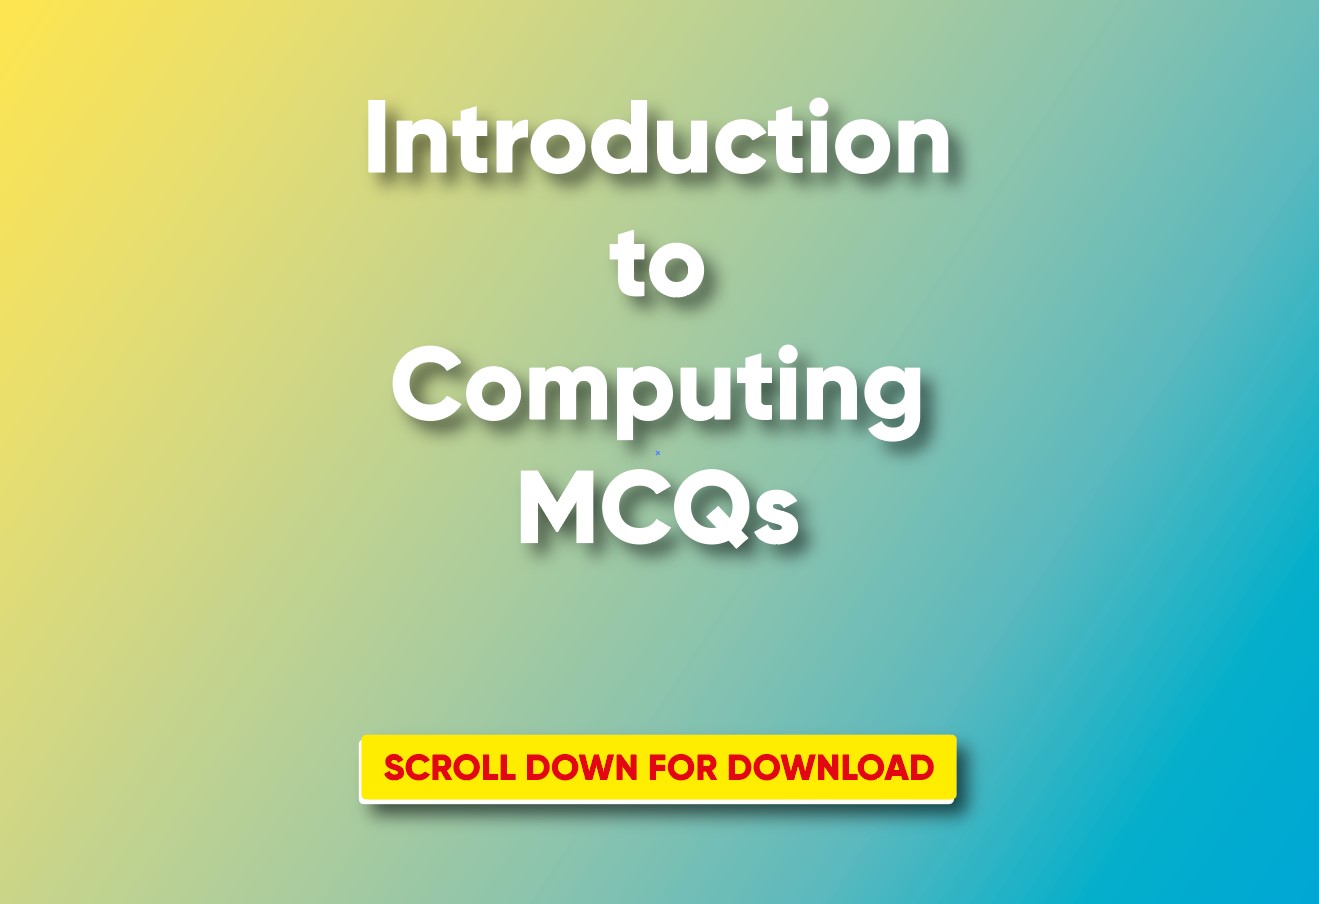 Introduction to Computing MCQs